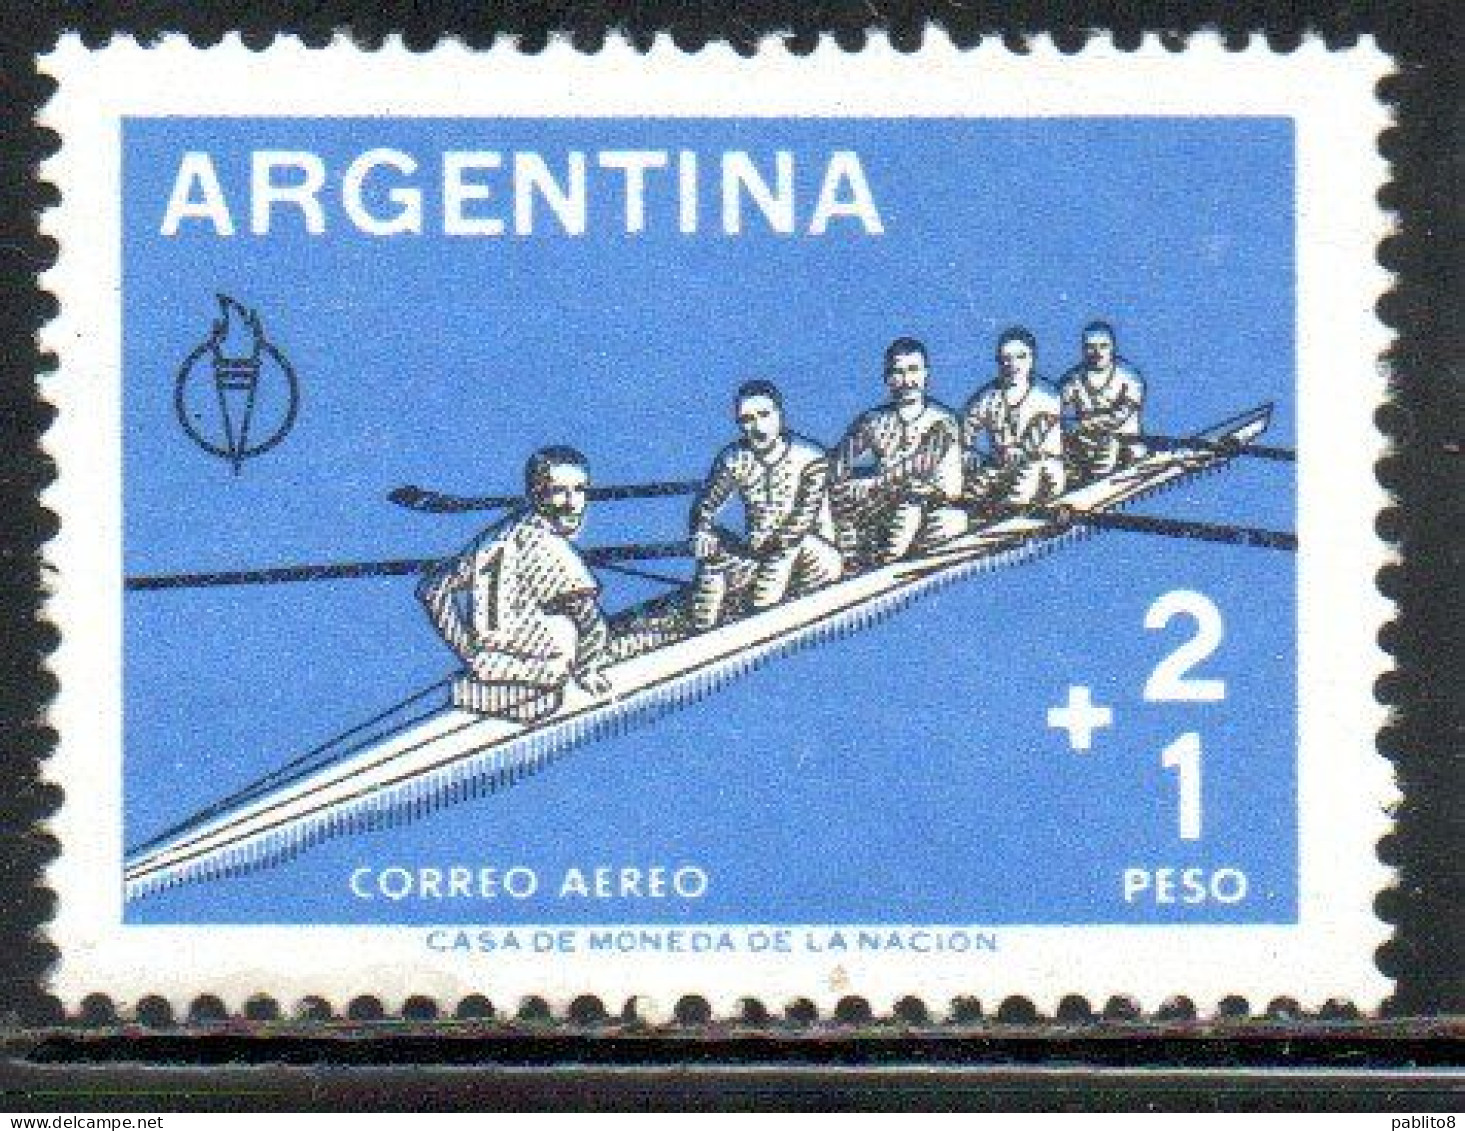 ARGENTINA 1959 AIR POST MAIL AIRMAIL CORREO AEREO ATHLETICS ROWING 2p + 1p MNH - Airmail